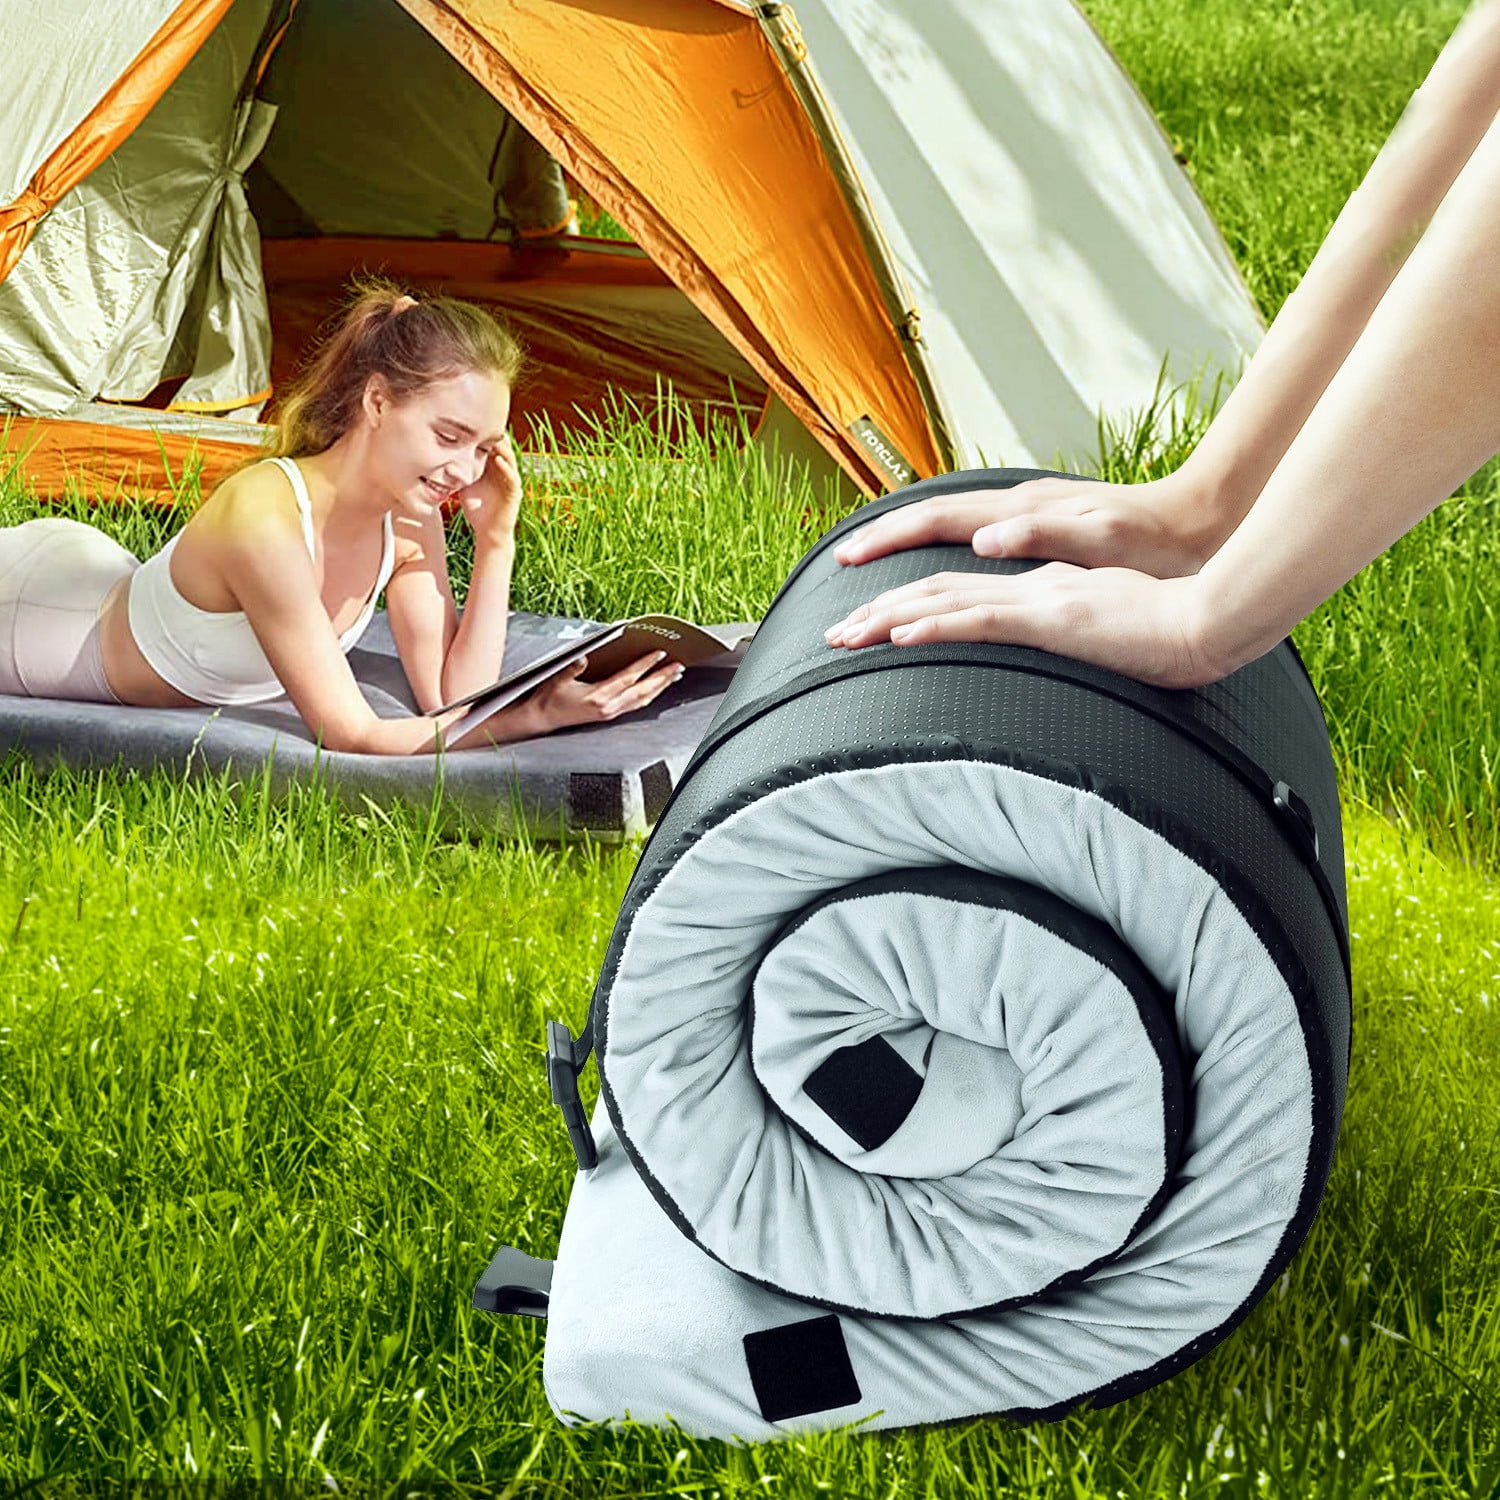 2.5 inch Memory Foam Sleeping Pad Camping Mattress,Portable Roll Up  Sleeping Mat, Waterproof,Small